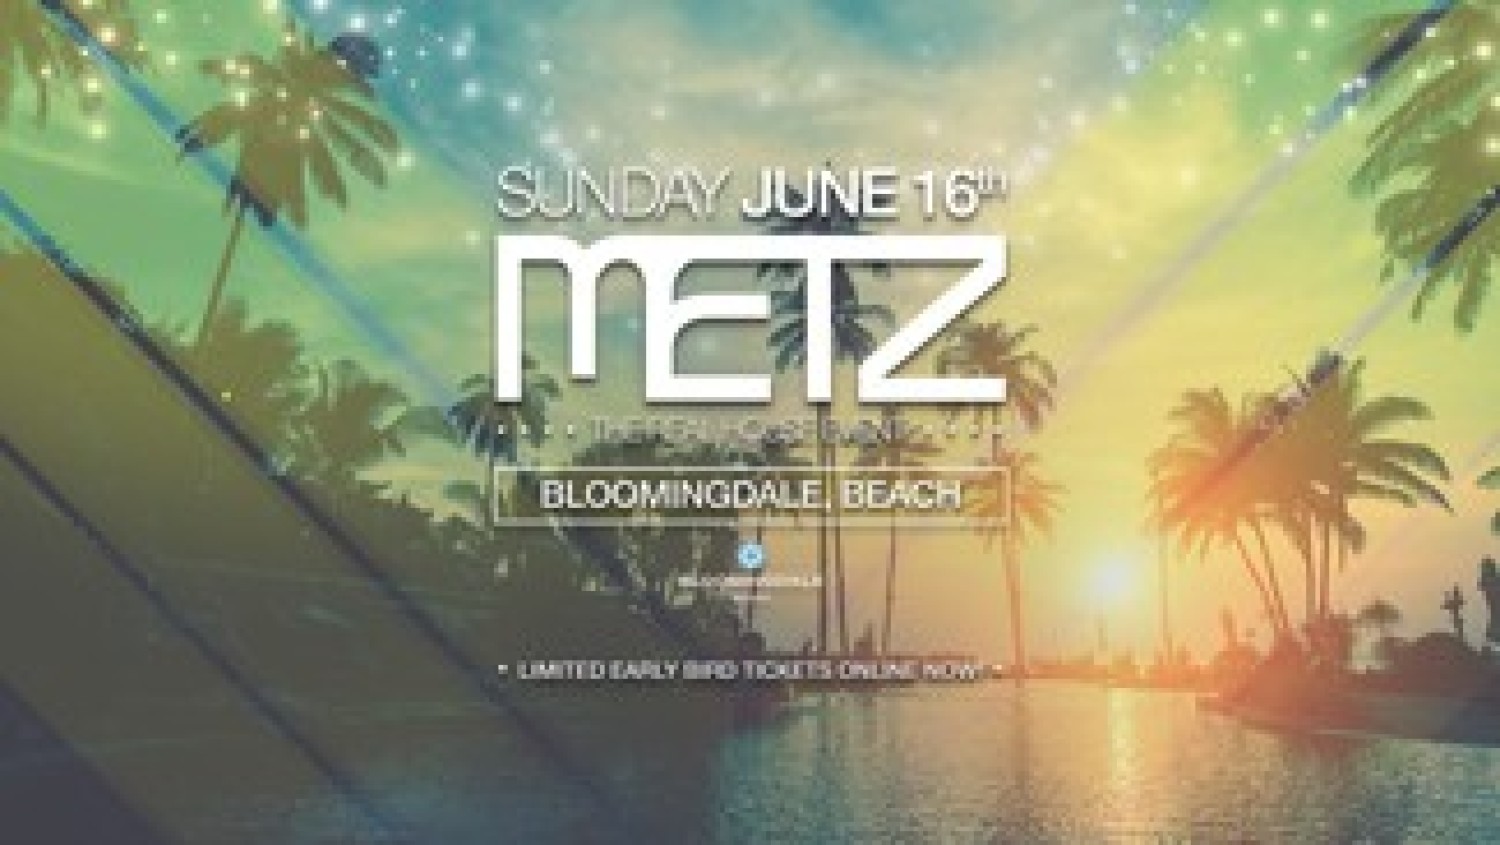 Party nieuws: Metz on the Beach bij Beachclub Bloomingdale in juni